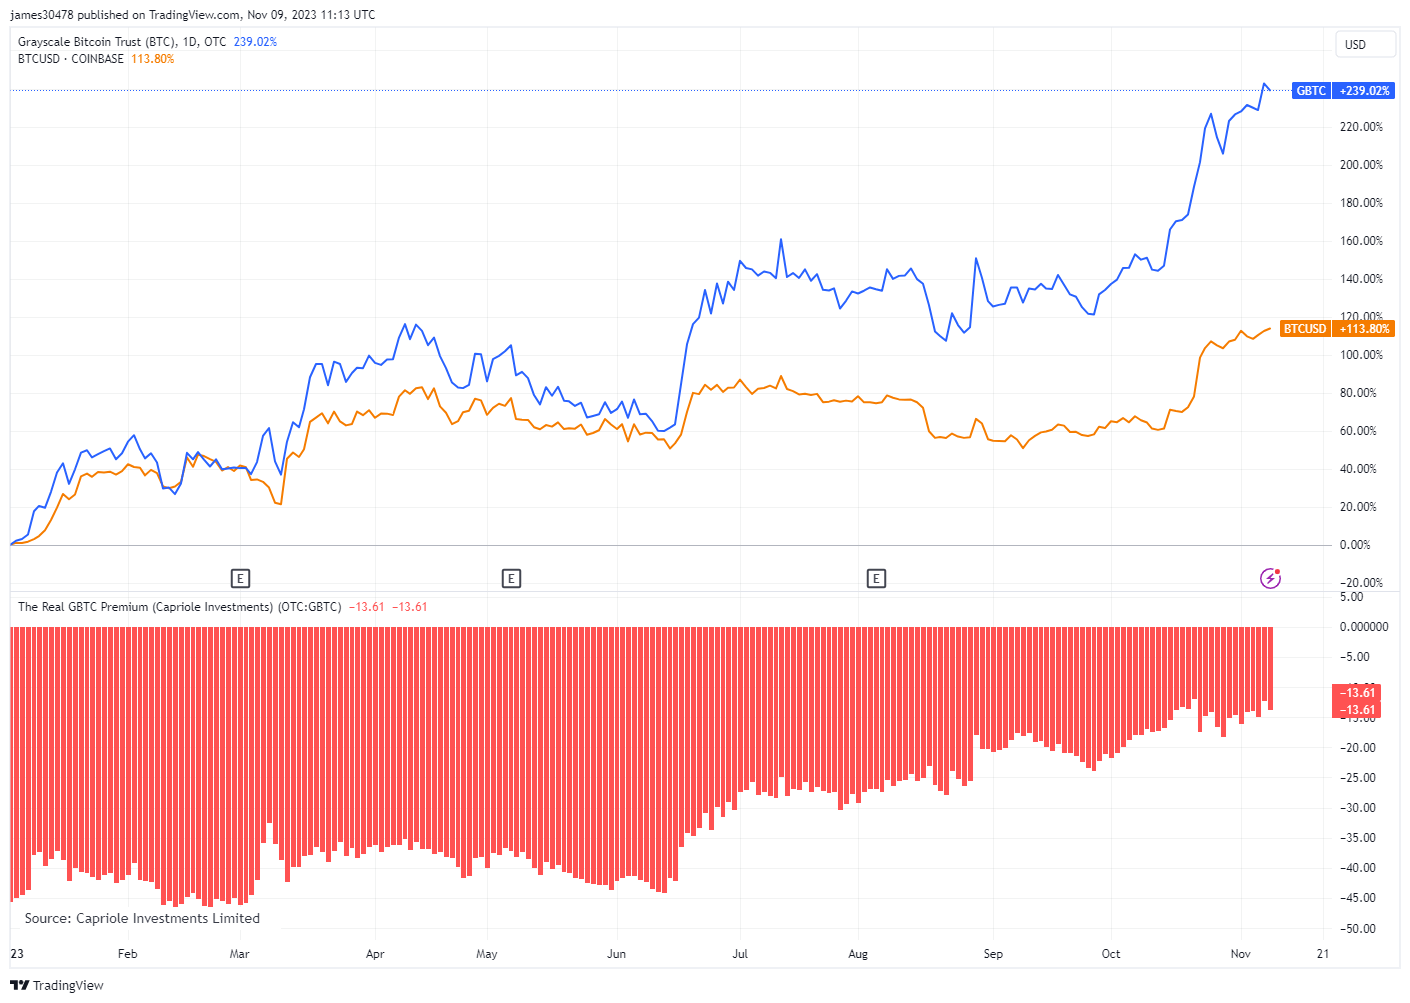 GBTC YTD Performance: (Source: Trading View)